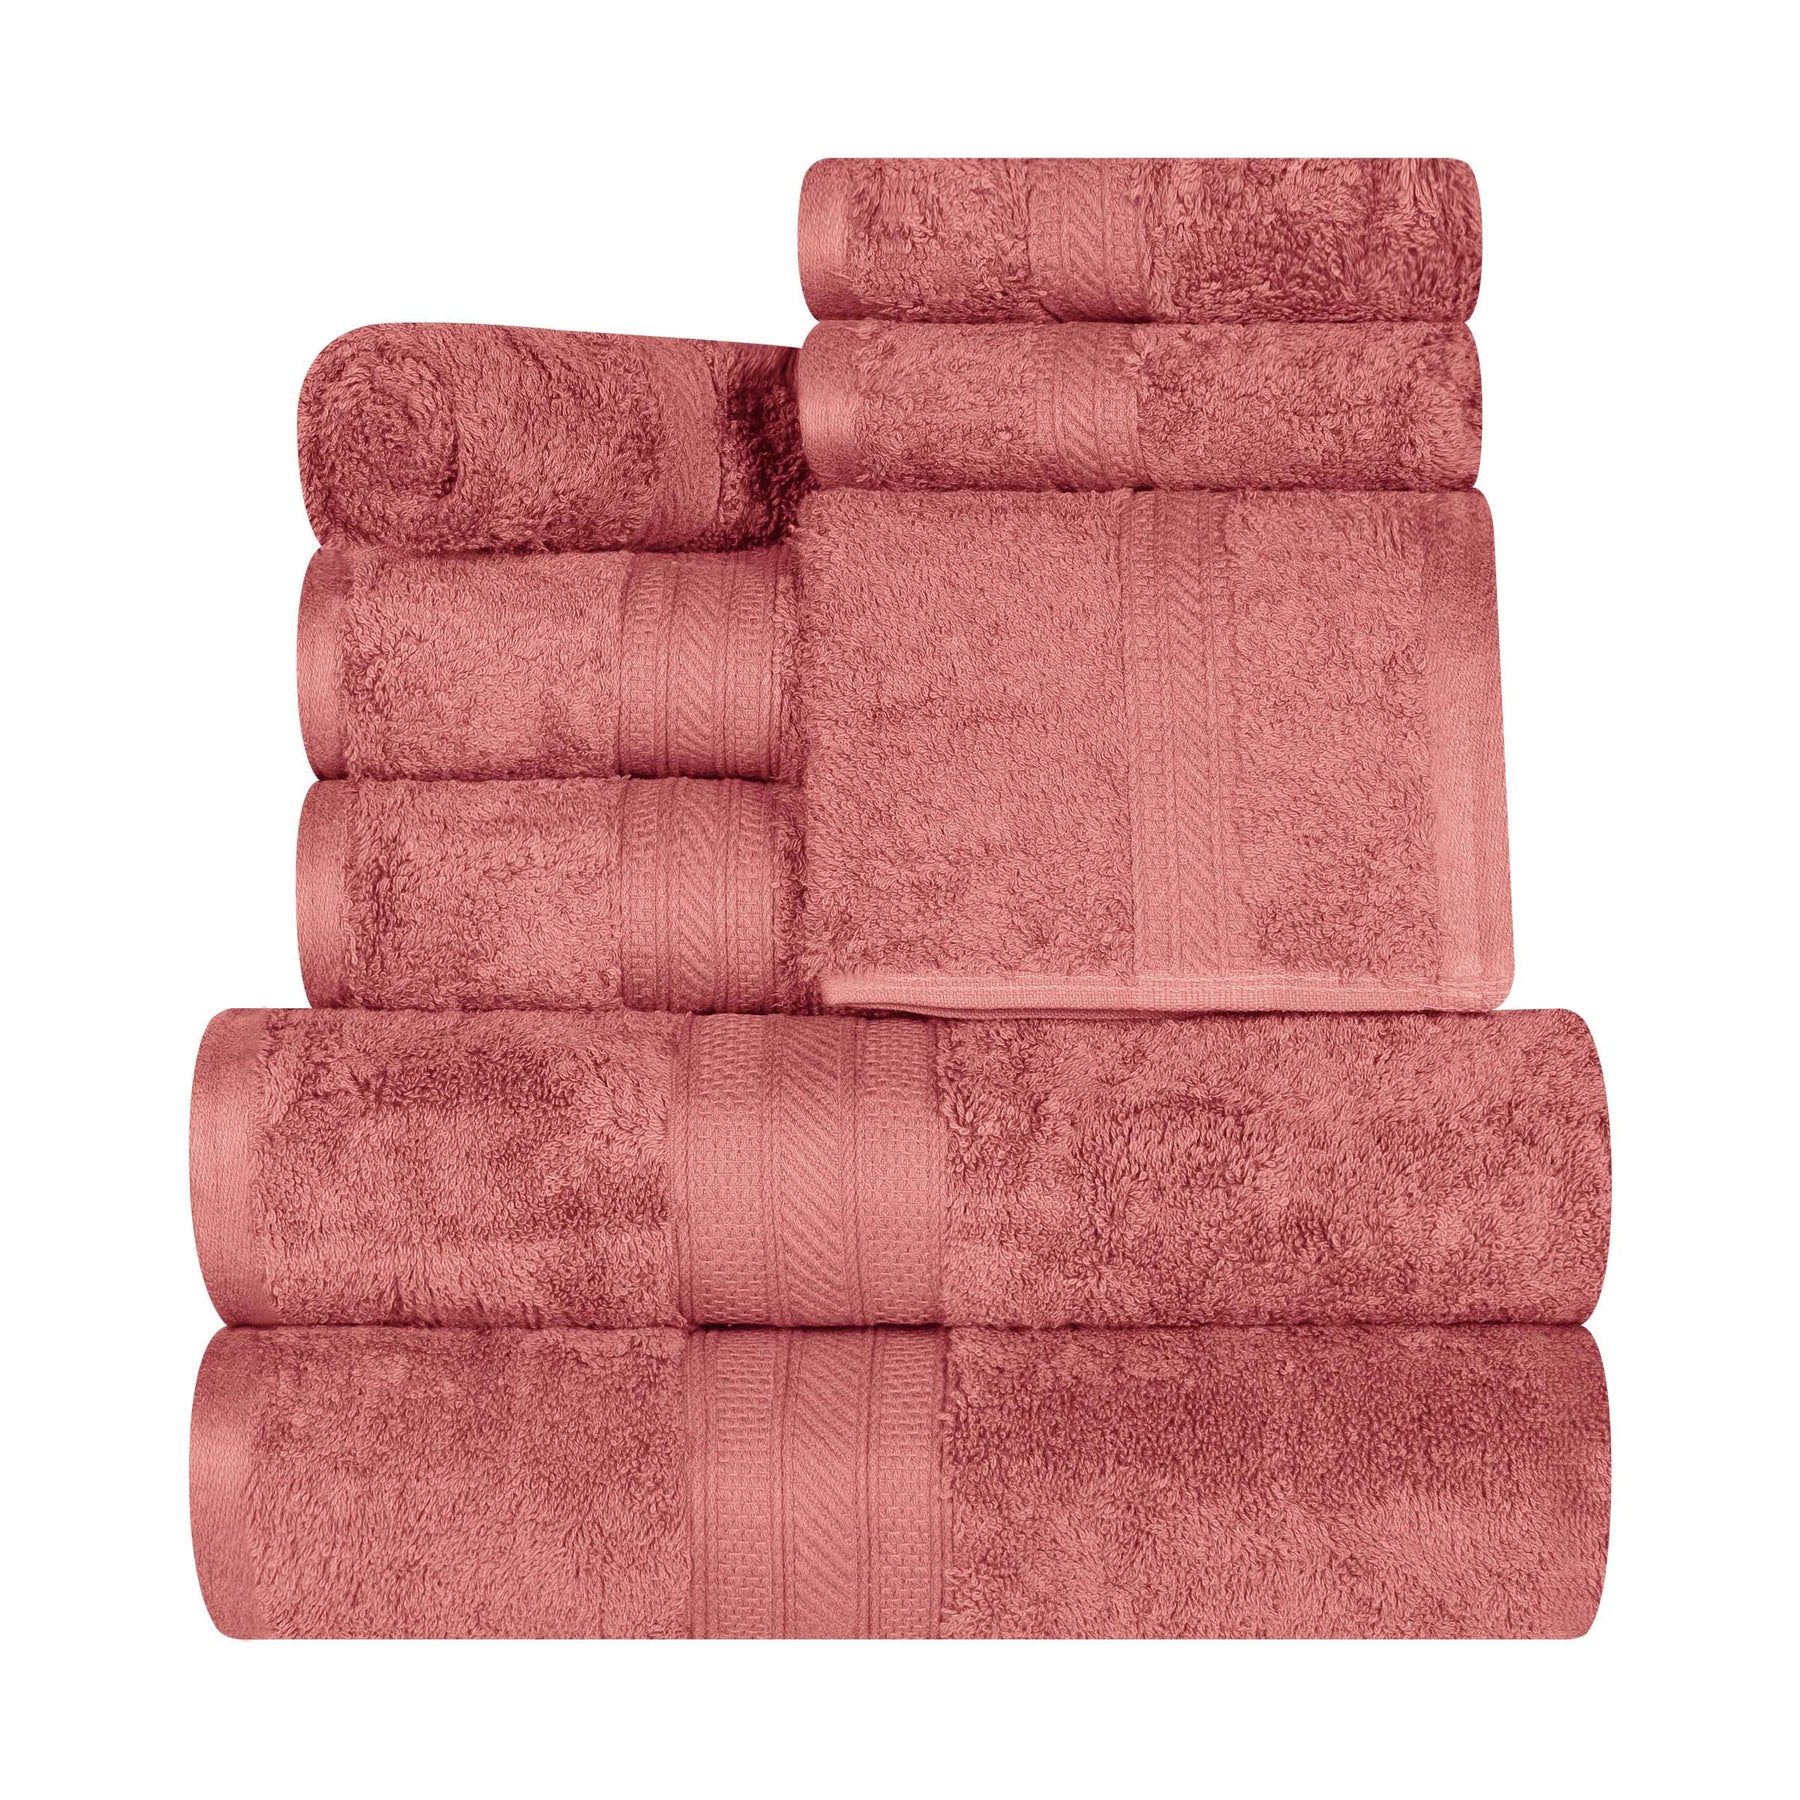 Cotton Heavyweight Absorbent Plush 8 Piece Towel Set - Blush